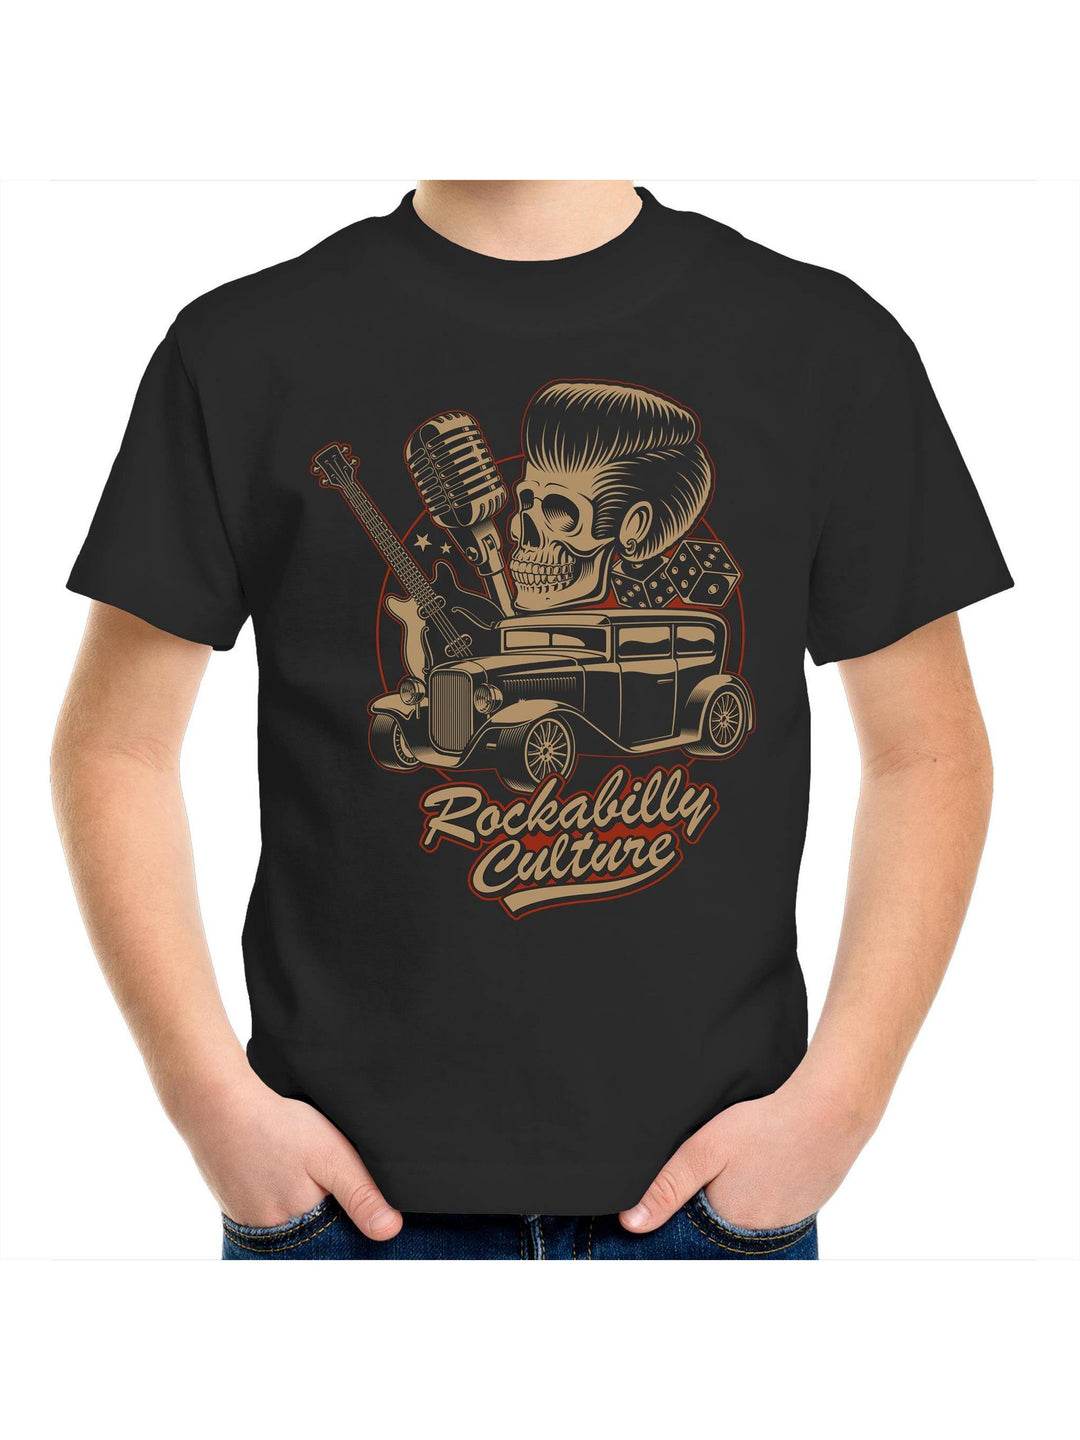 ROCKABILLY CULTURE Kids Youth Crew T-Shirt